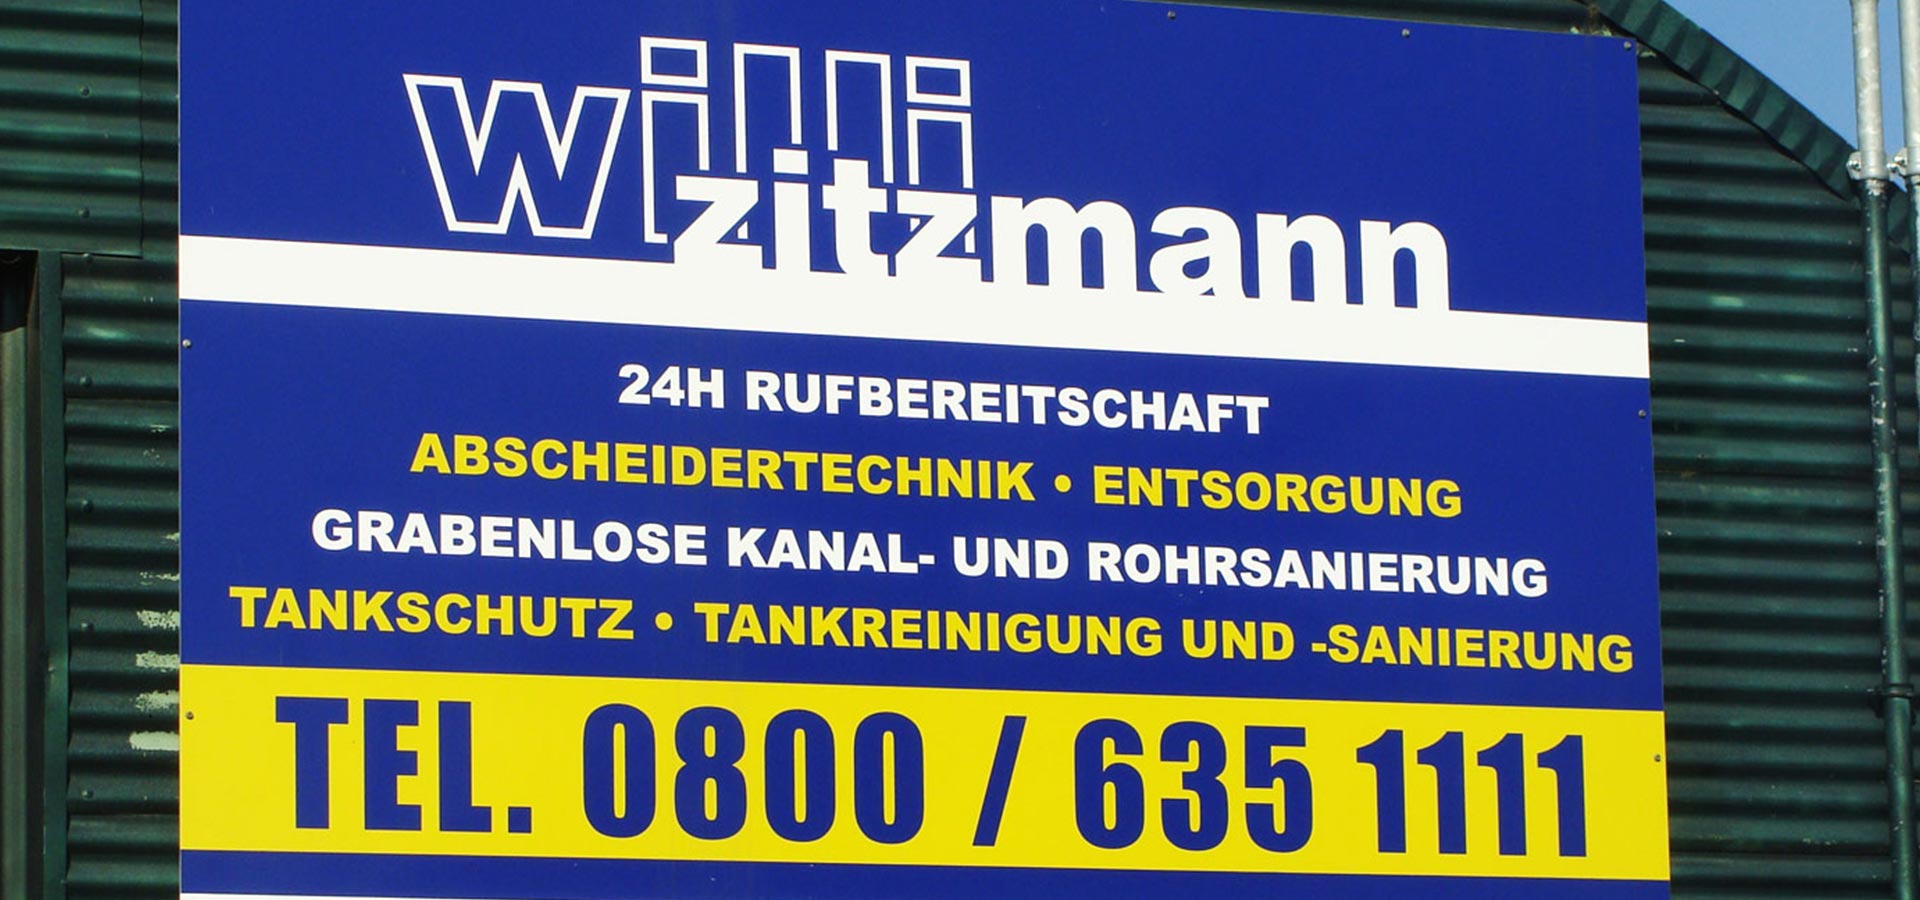 Kontakt Willi Zitzmann